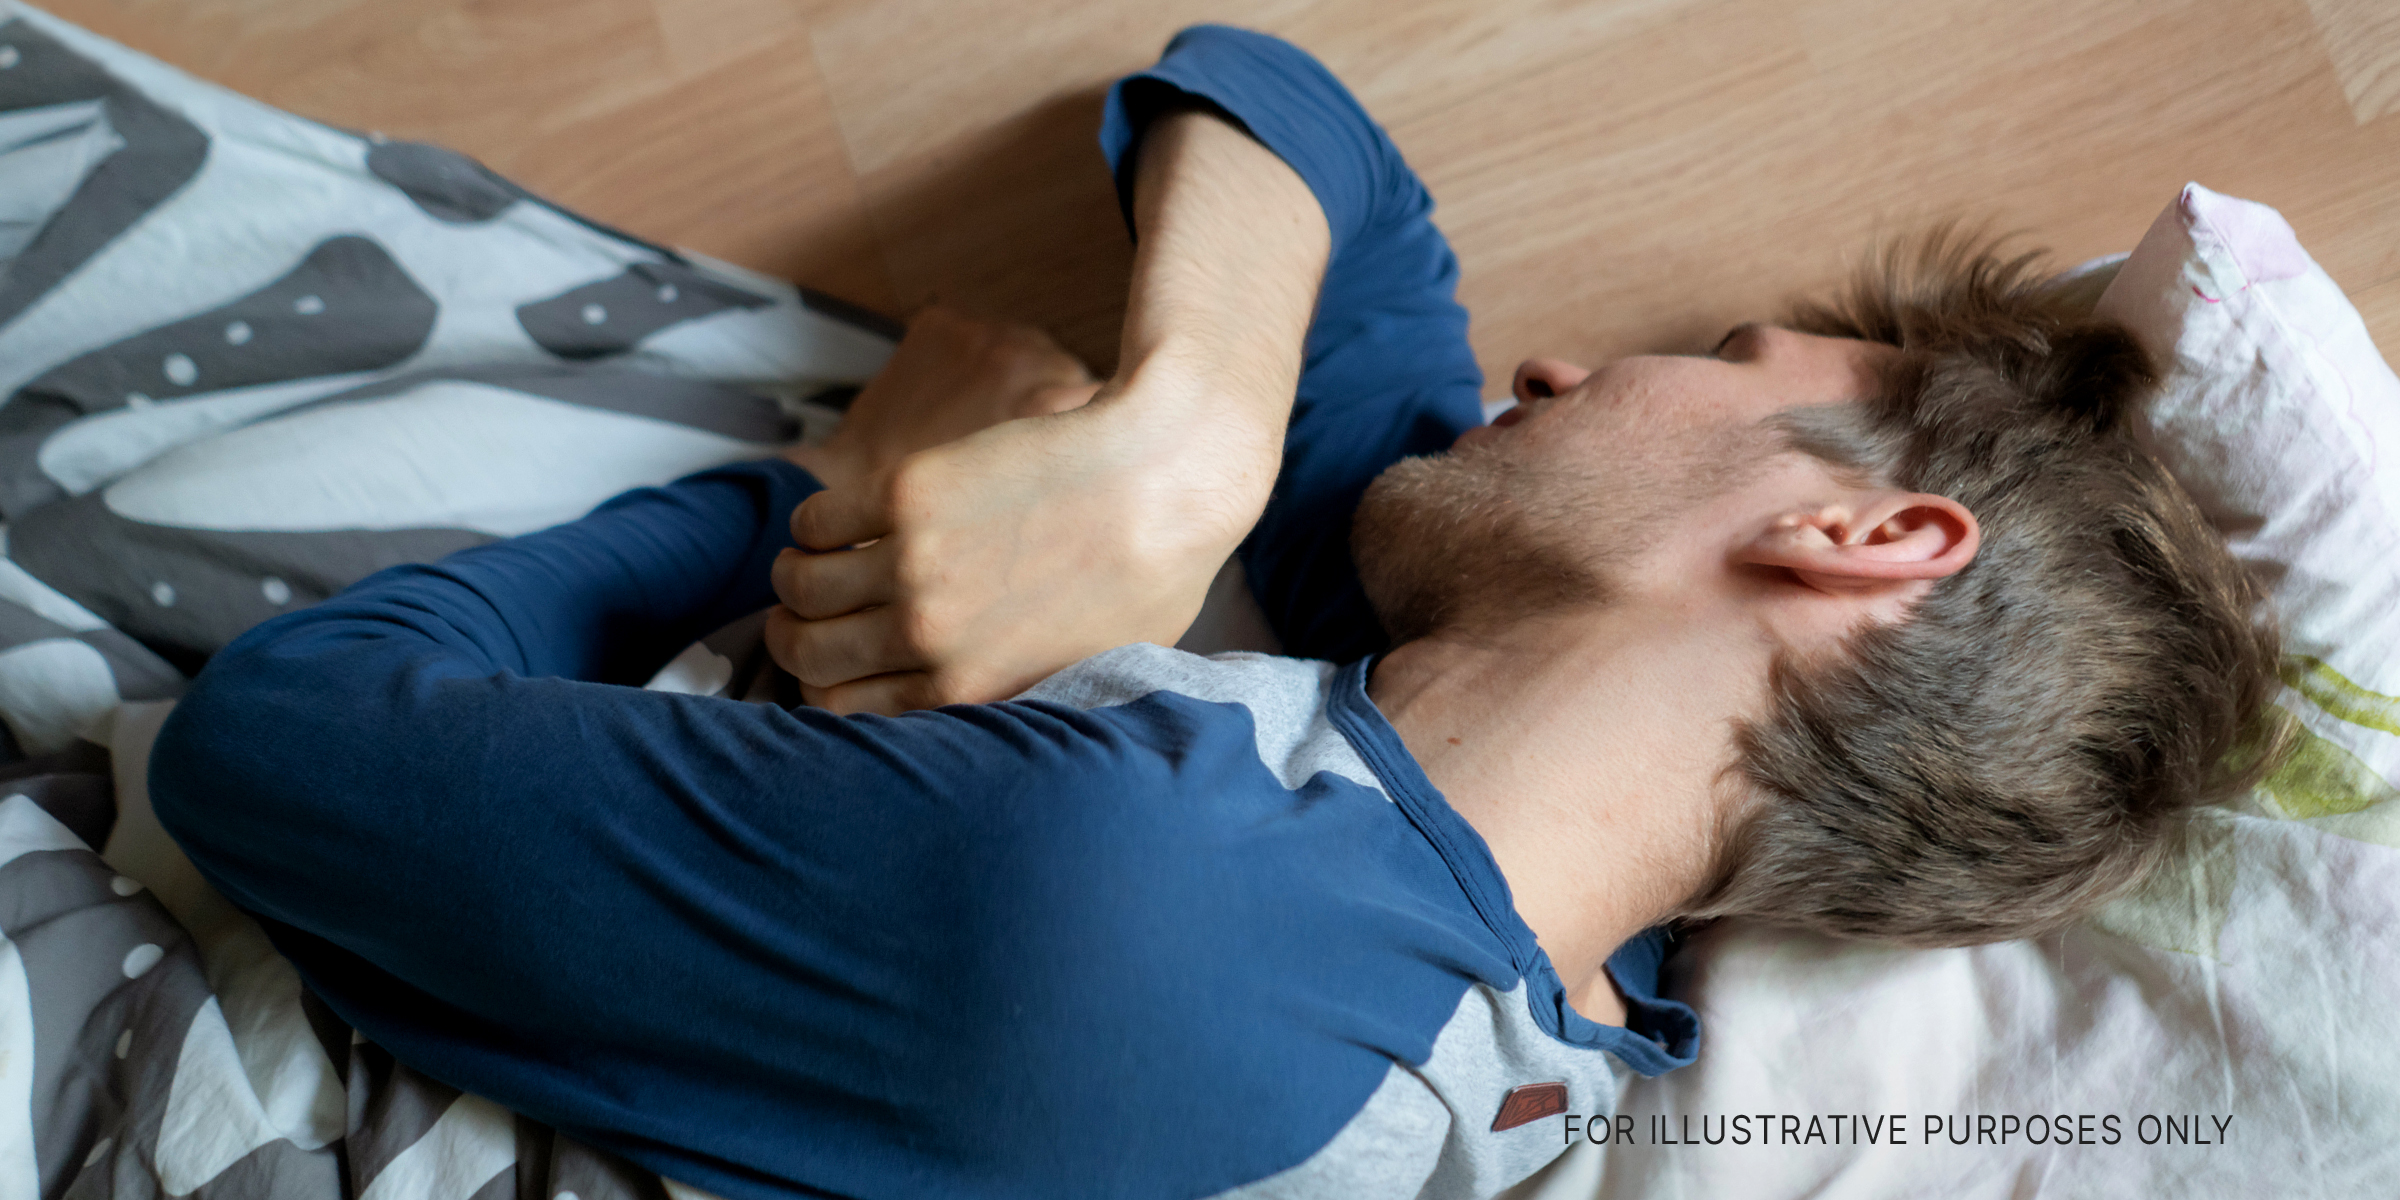 A man sleeping on the floor | Source: Shutterstock